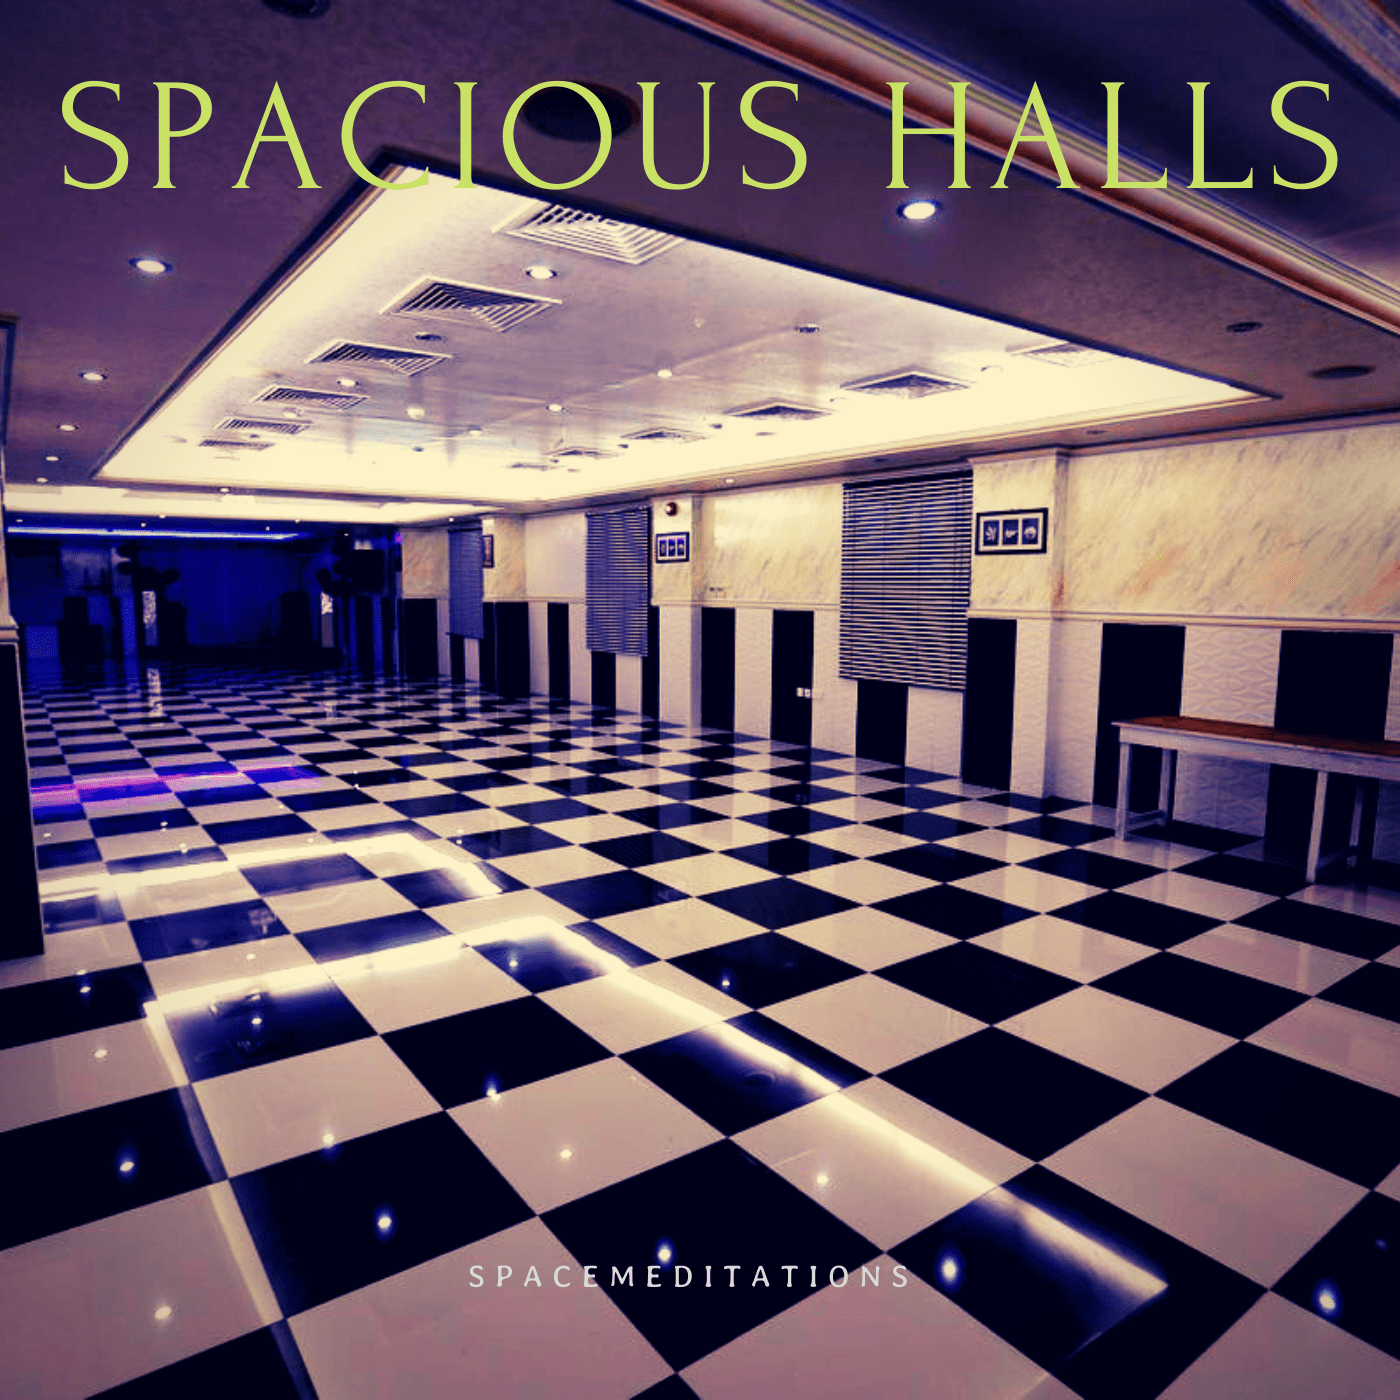 Spacious halls